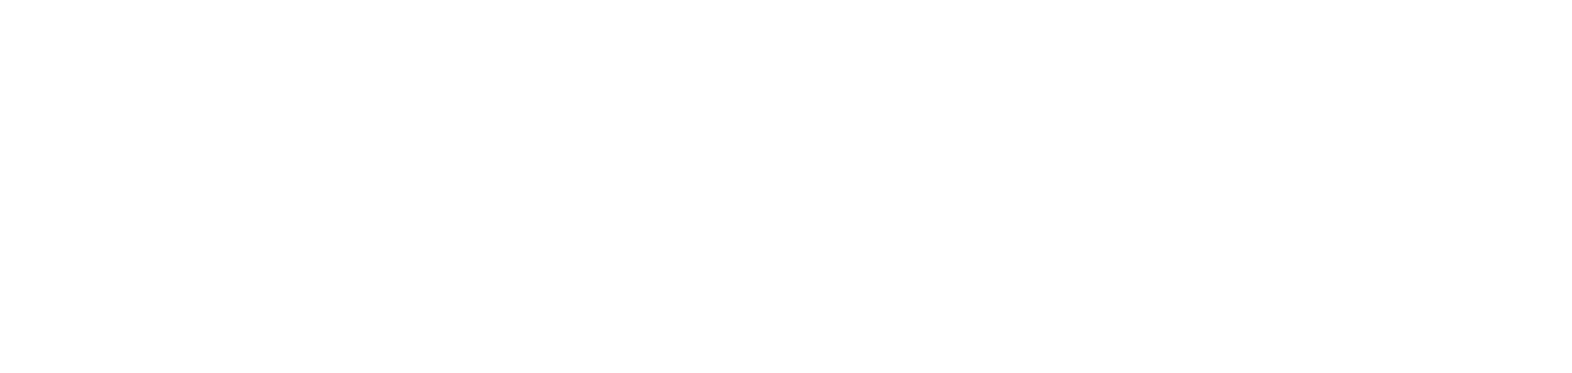 Electra Meccanica logo grand pour les fonds sombres (PNG transparent)